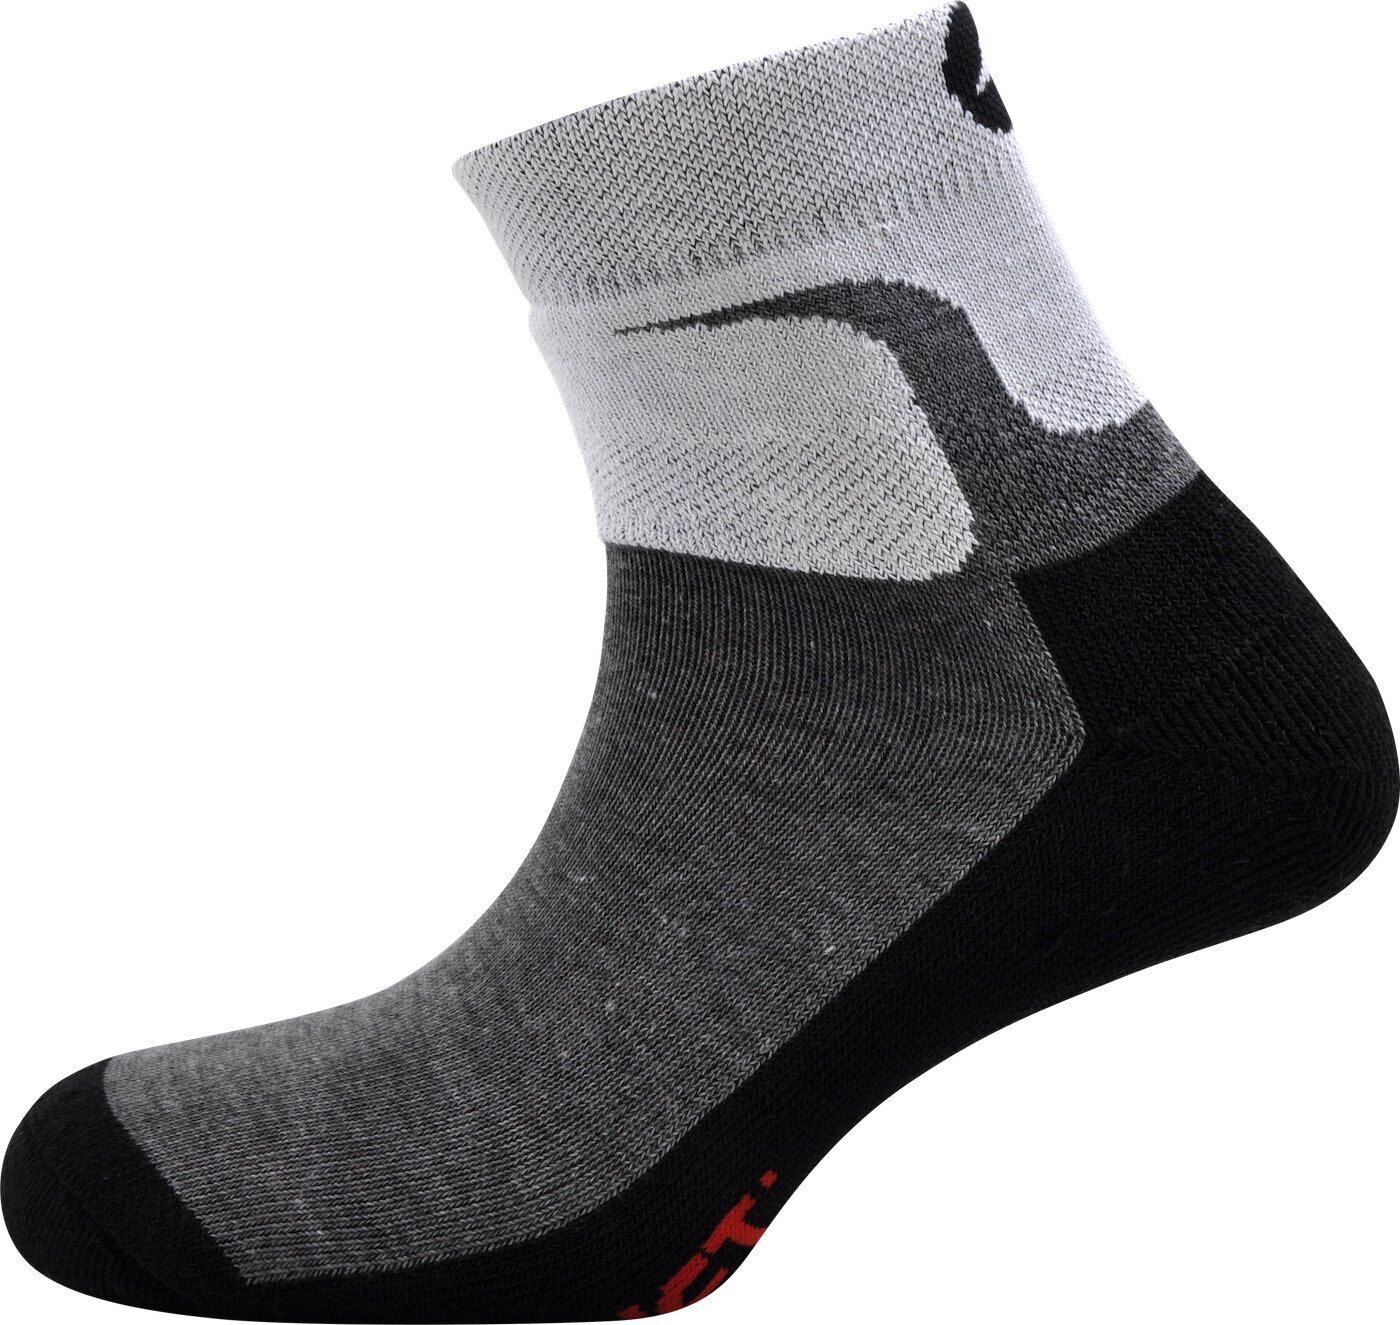 Monnet - Mid Perf - Hiking socks